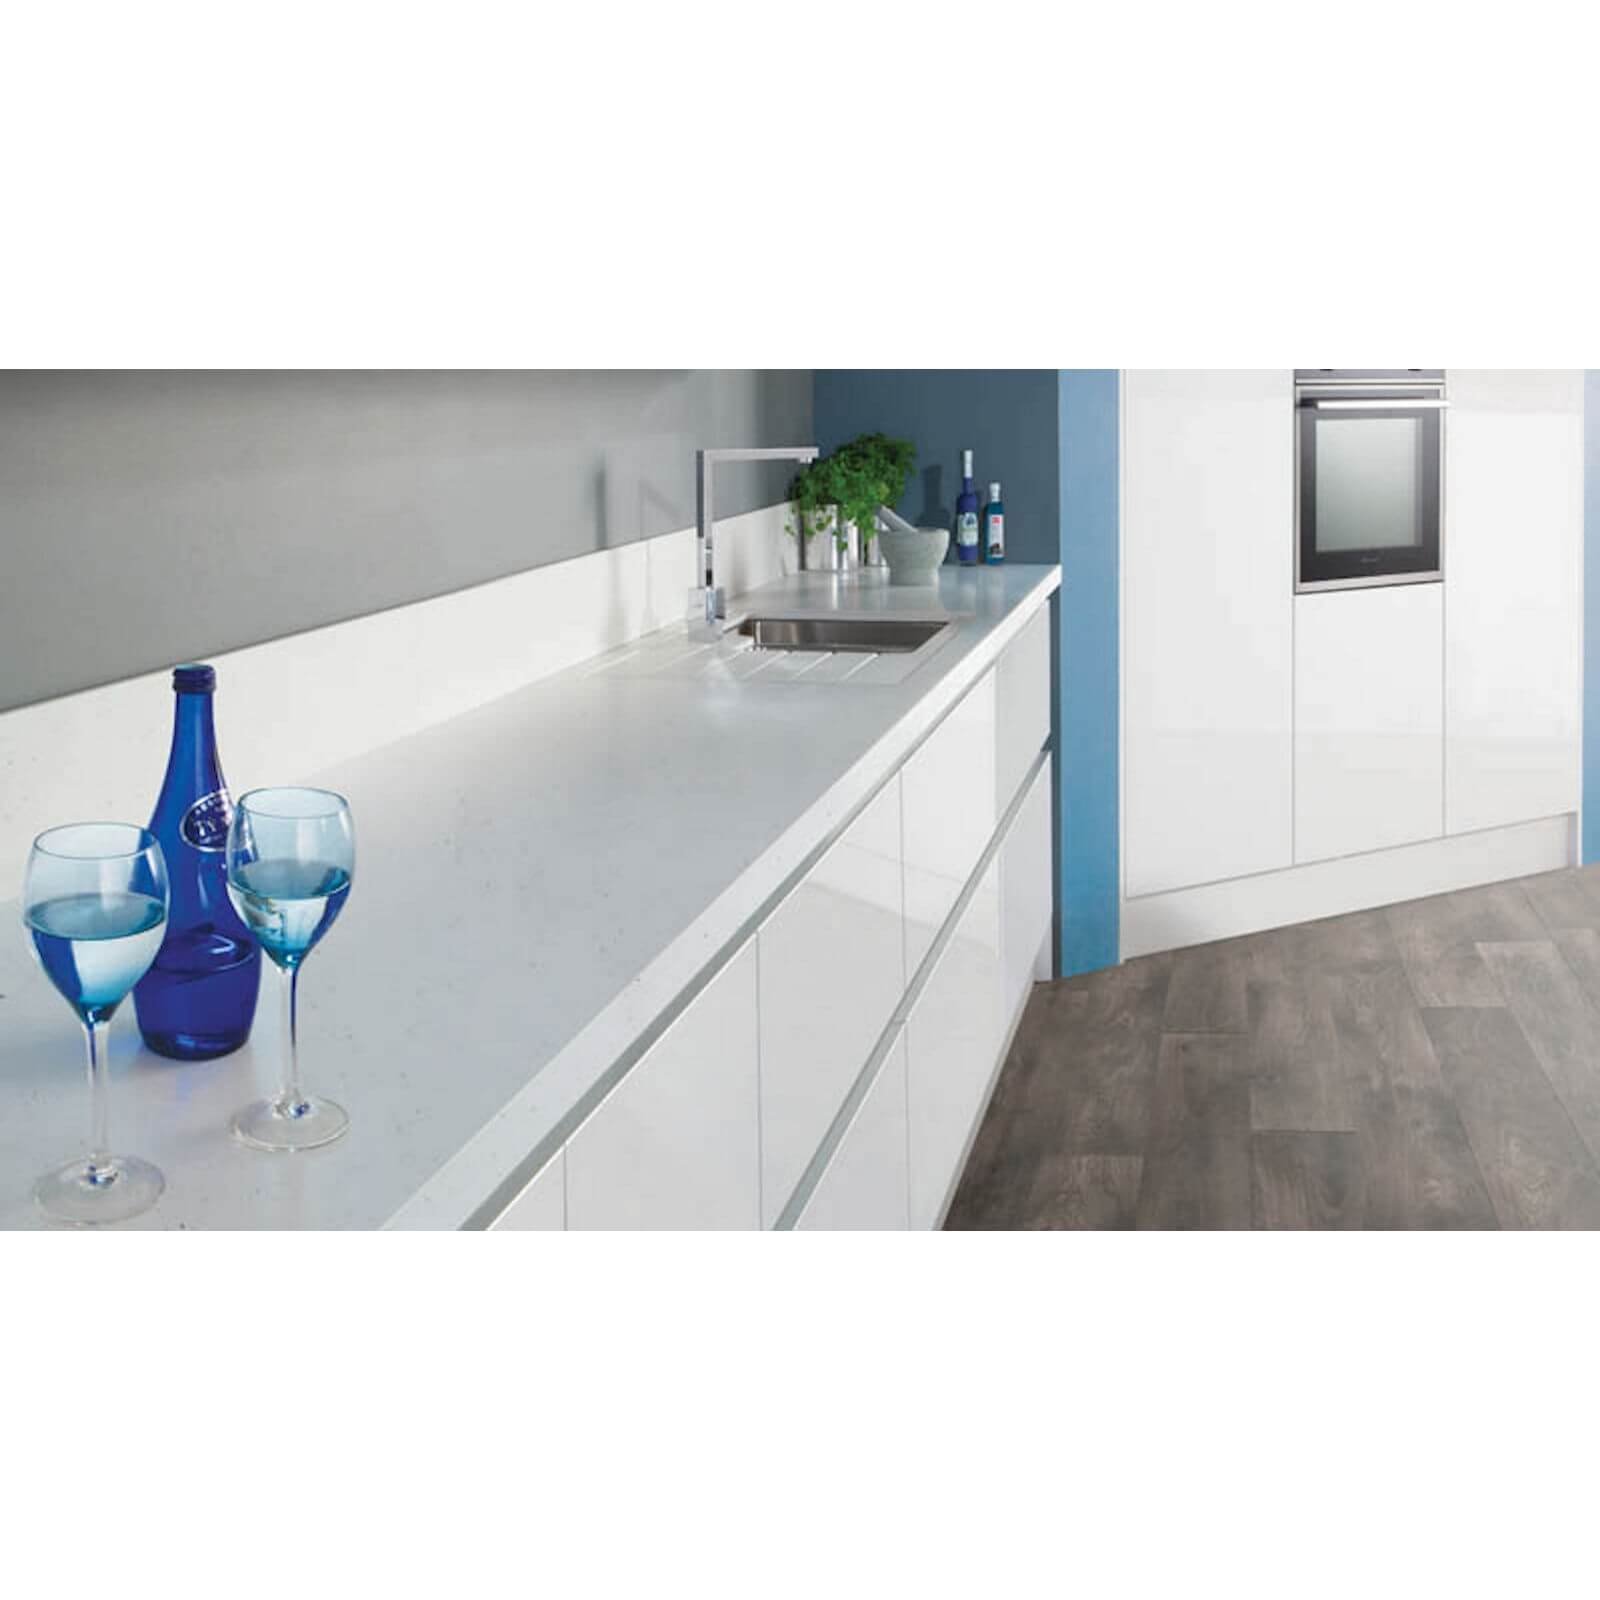 Maia Calcite Kitchen Sink Worktop - Universal Super Large Bowl - 1800 x 600 x 42mm